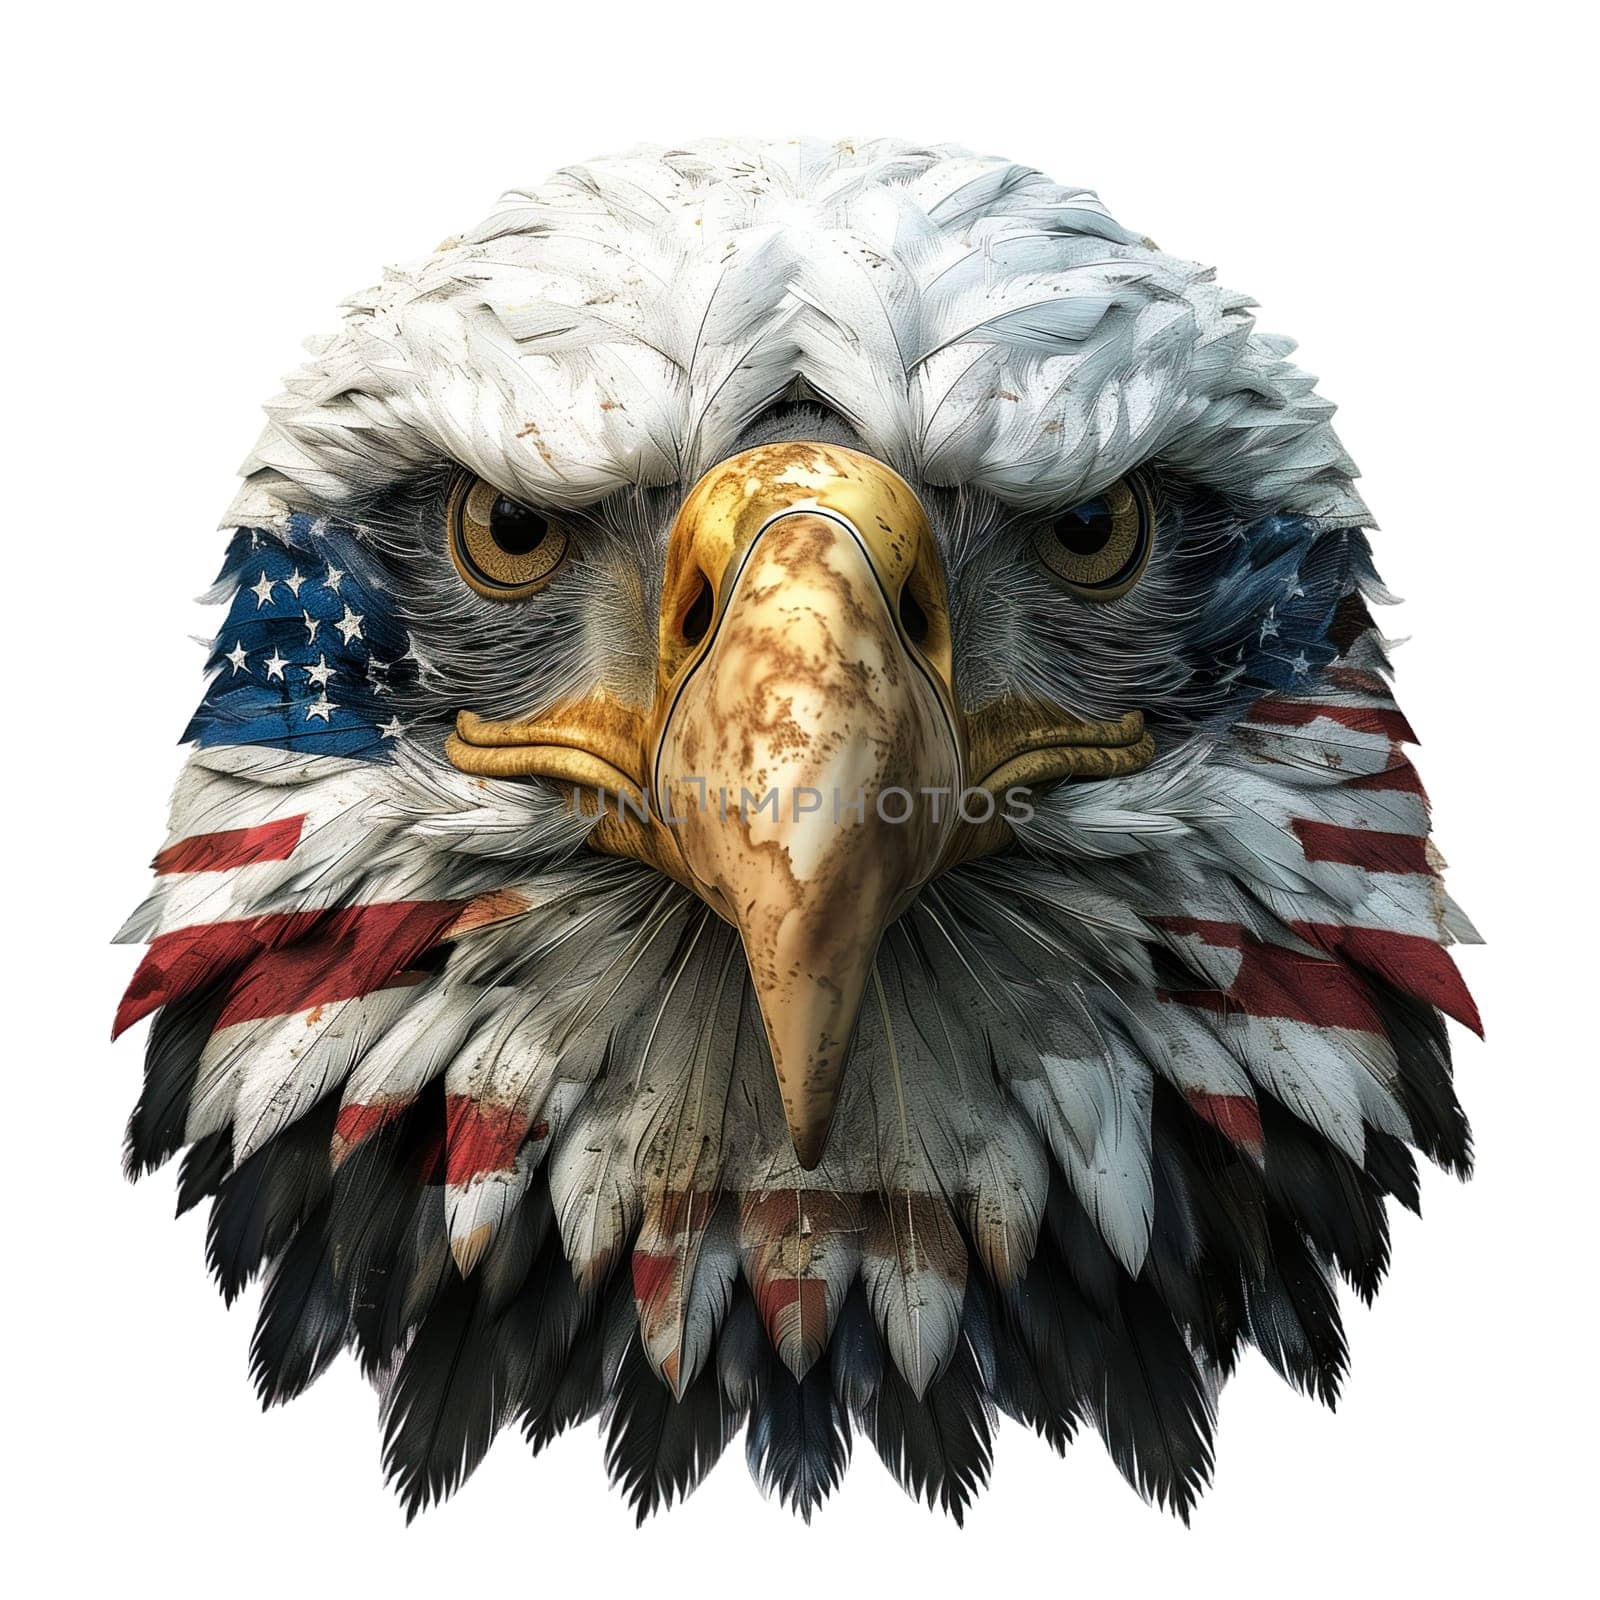 American eagle freedom patriotic symbol by Dustick